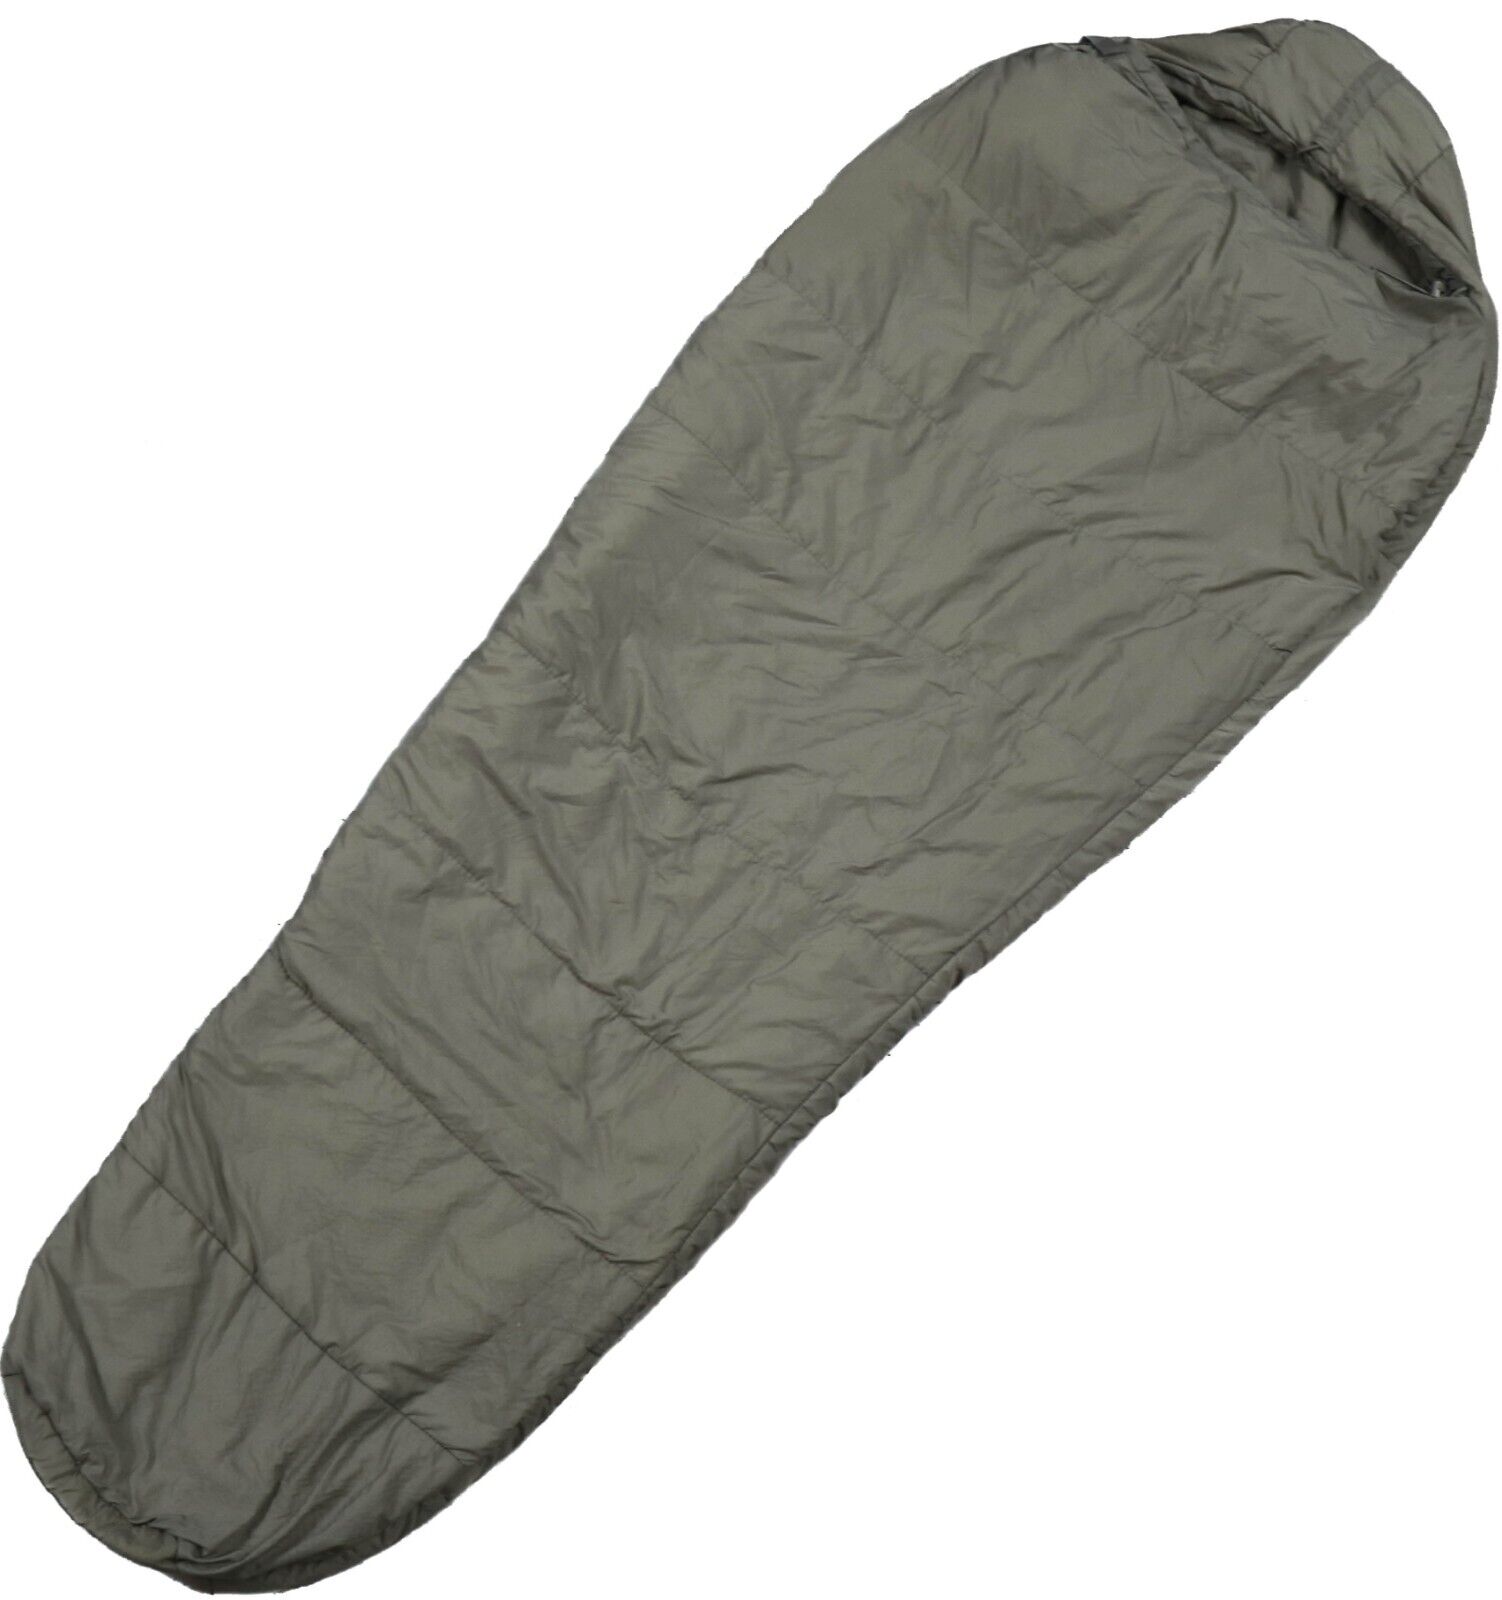 DAMAGED -US Military Modular Sleeping Bag Intermediate Cold Sleep System ACU UCP